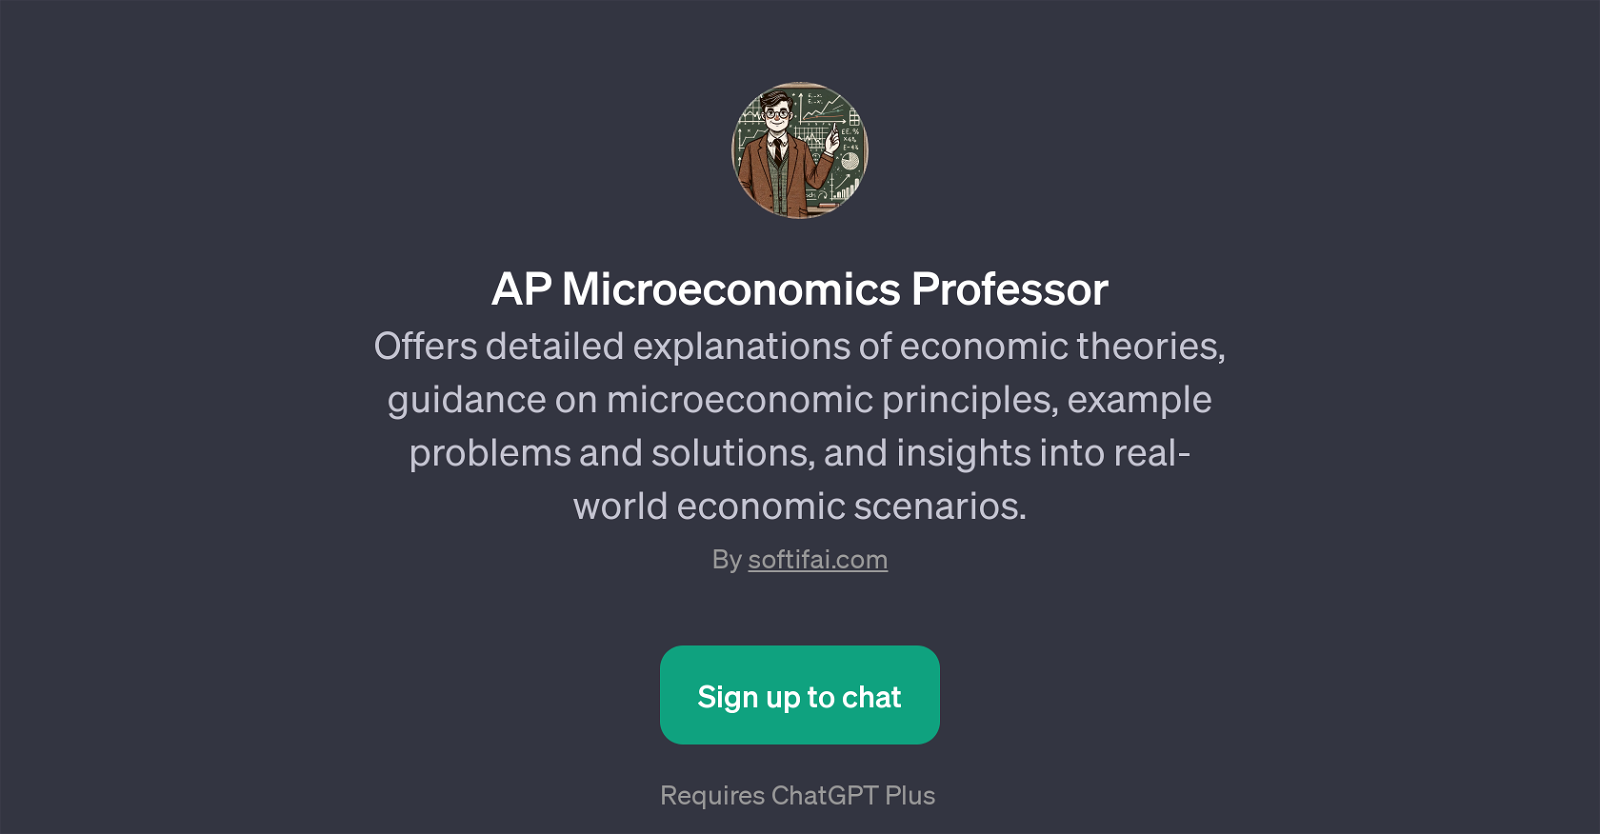 AP Microeconomics Professor website